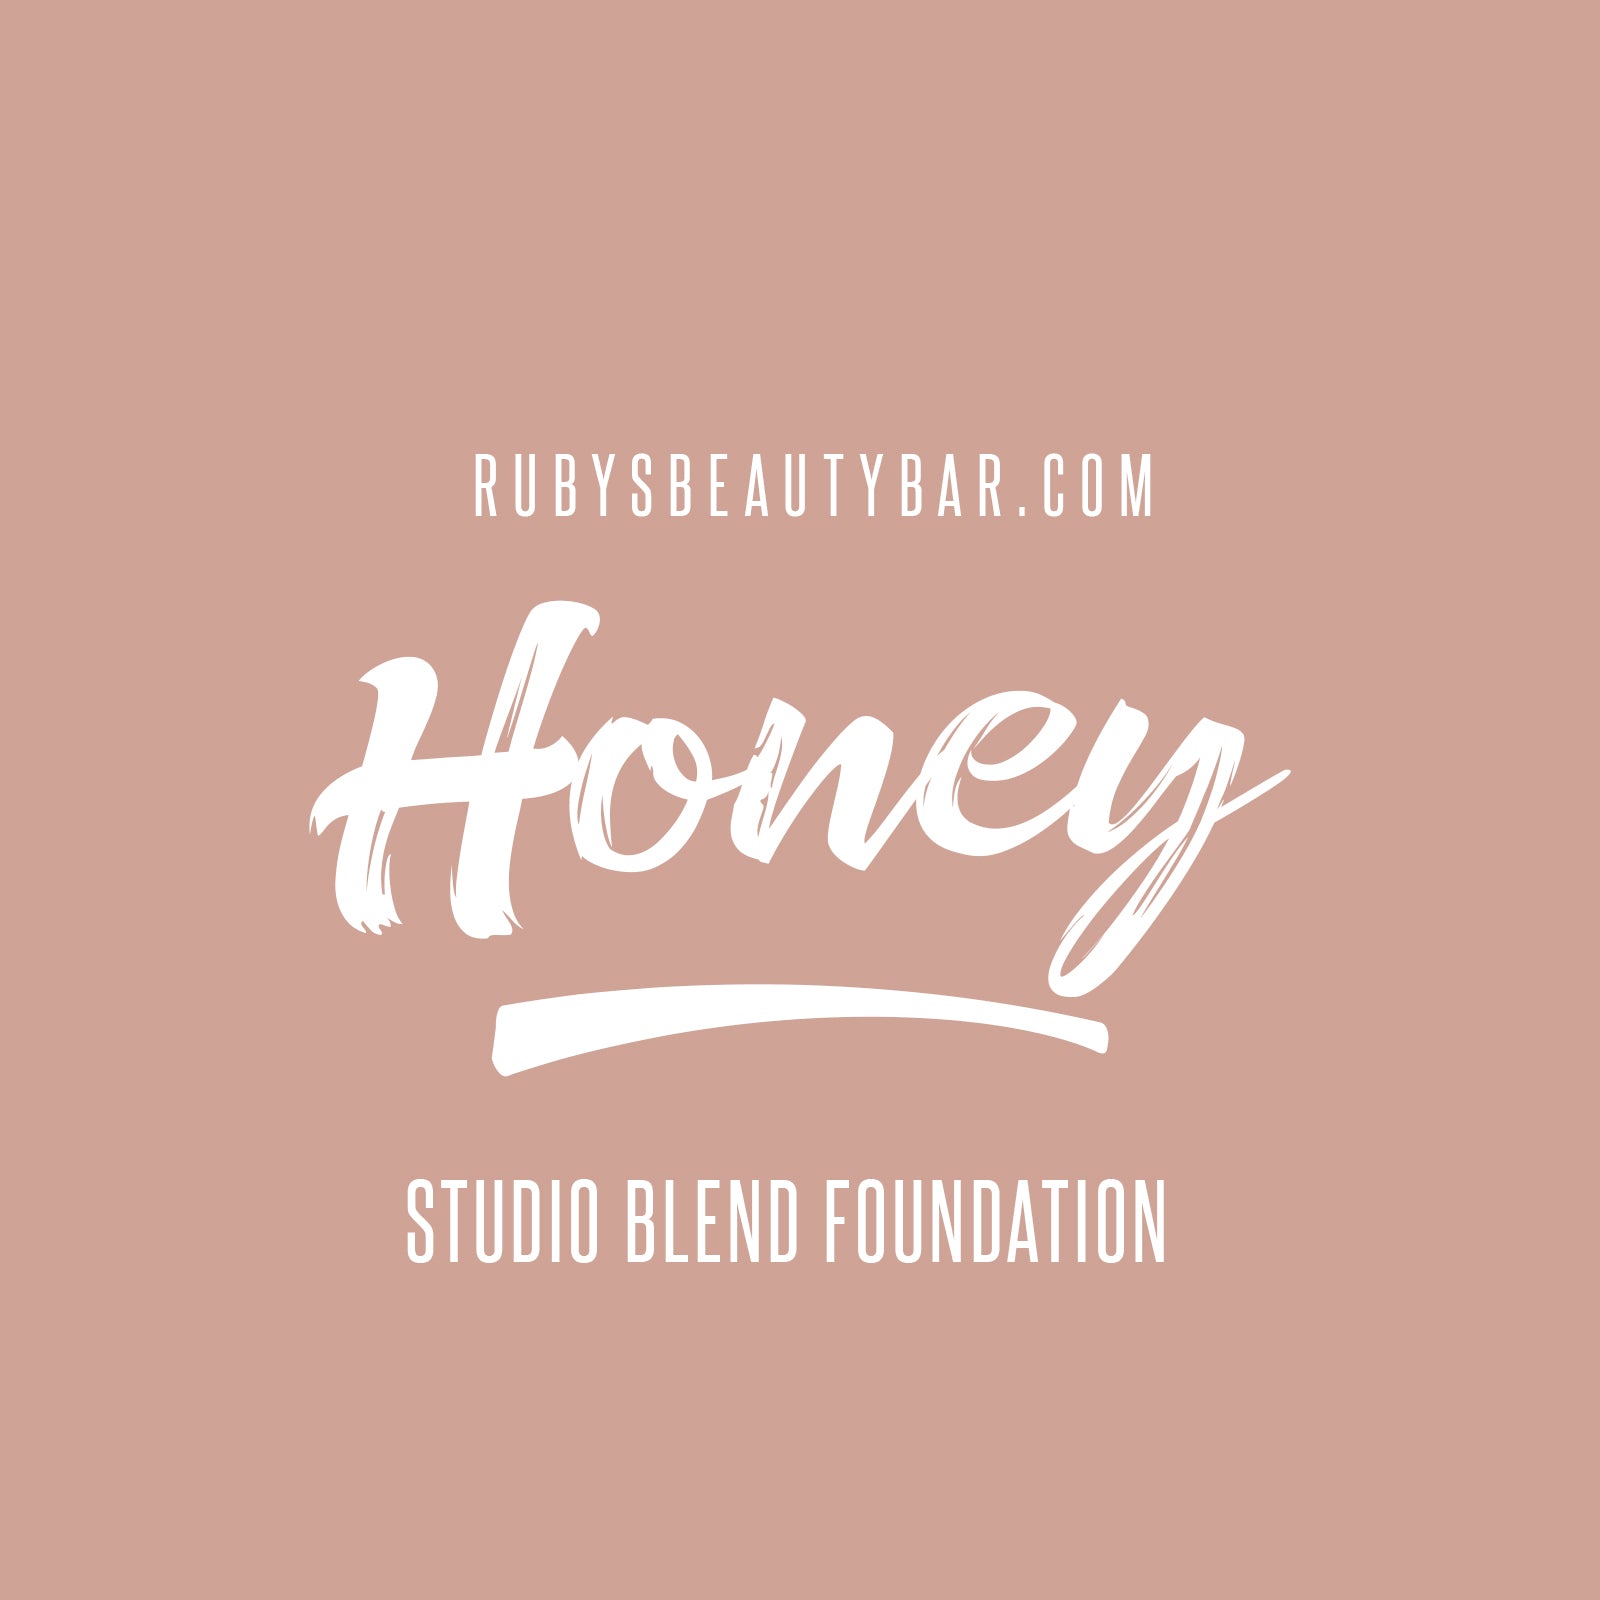 Honey Studio Blend Foundation - rubybeautycle